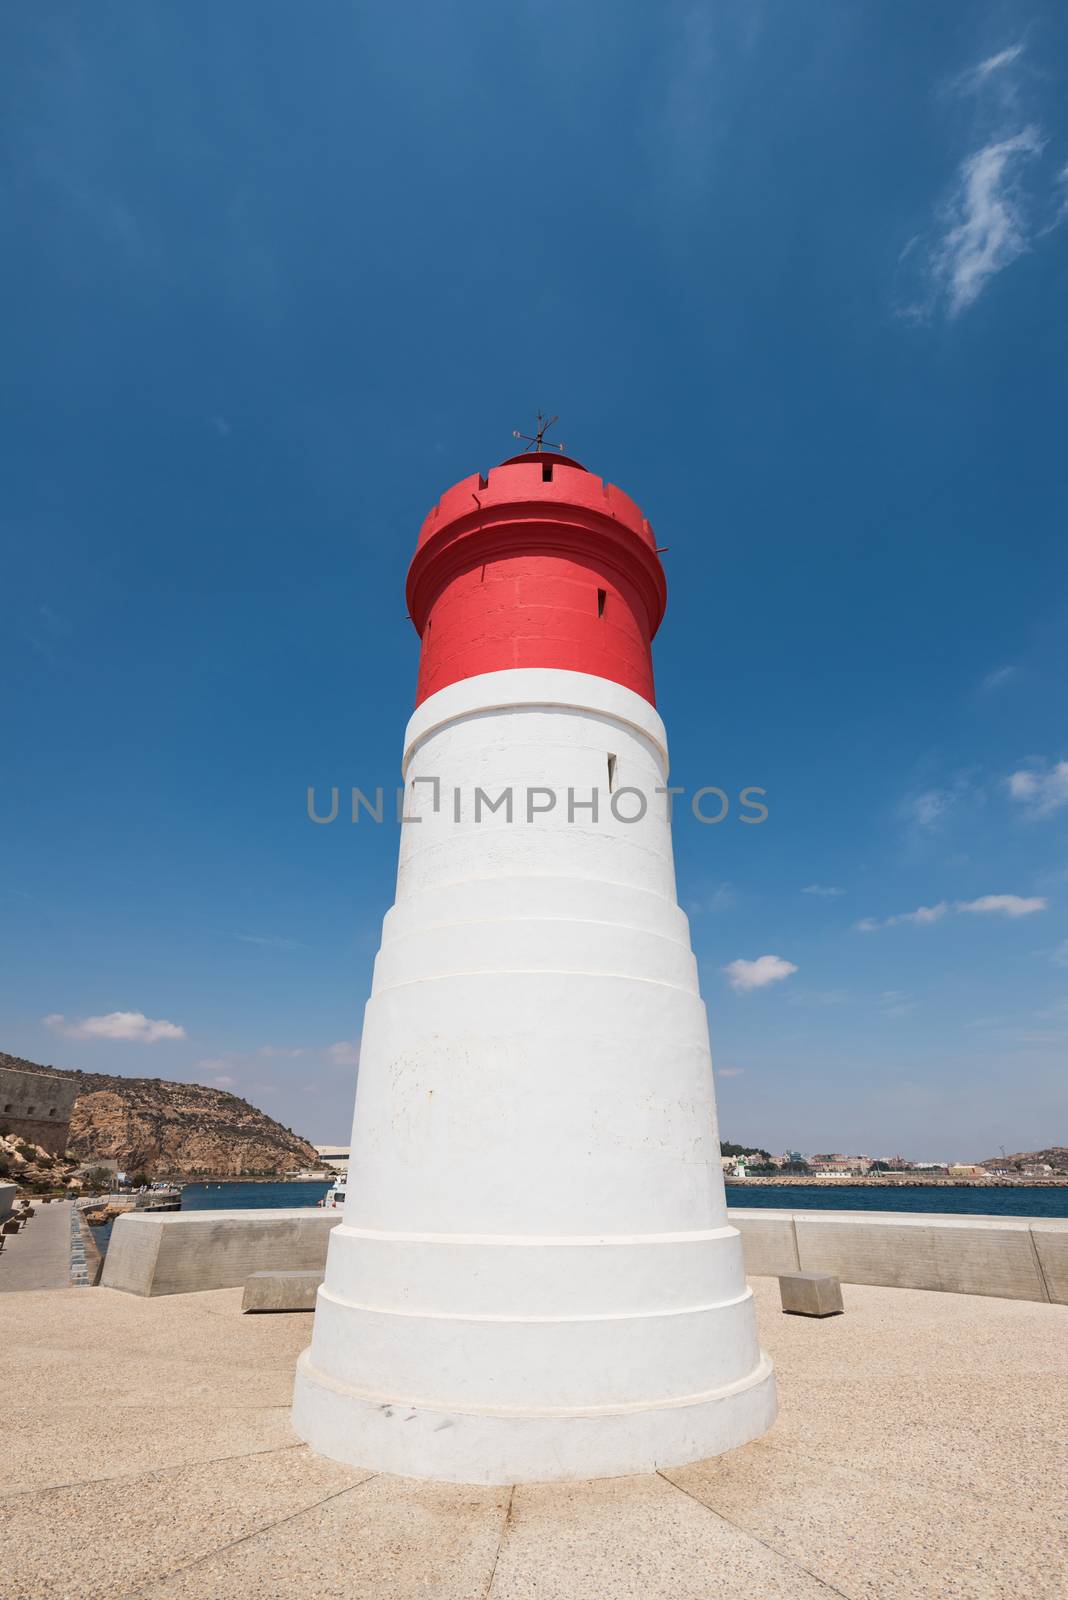 Christmas Lighthouse in Cartagena harbor, Murcia, Spain.